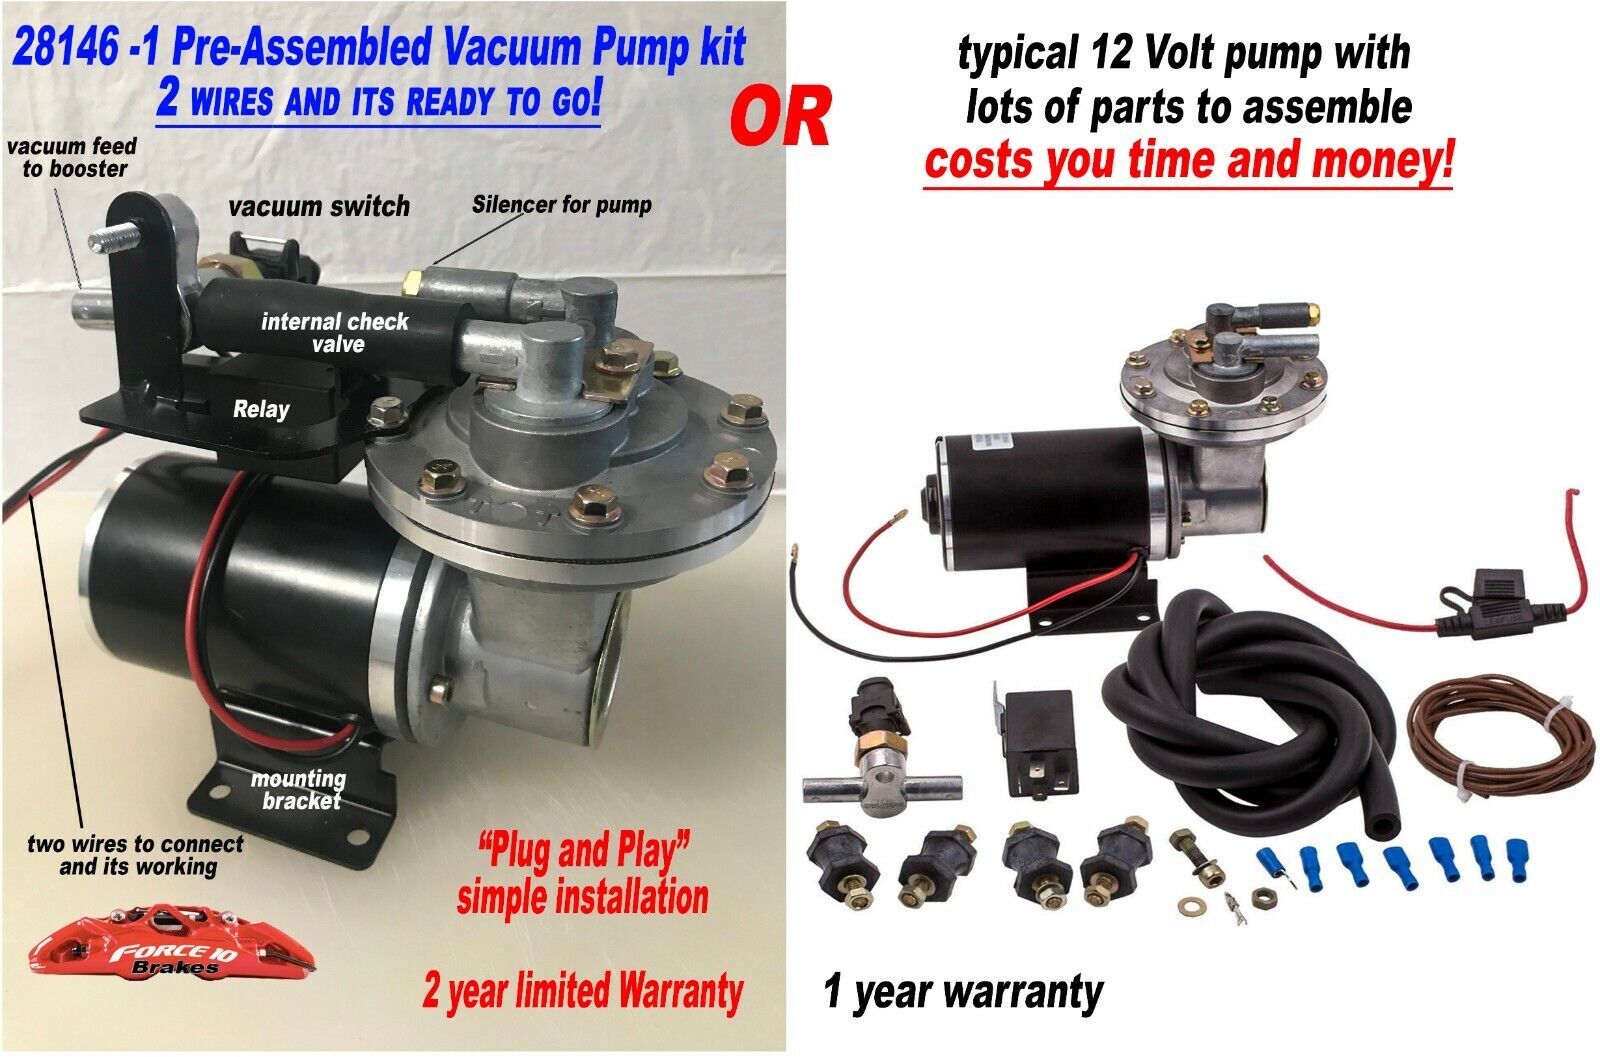 Electric Power Brake Vacuum Pump premium Kit, Easy install, \